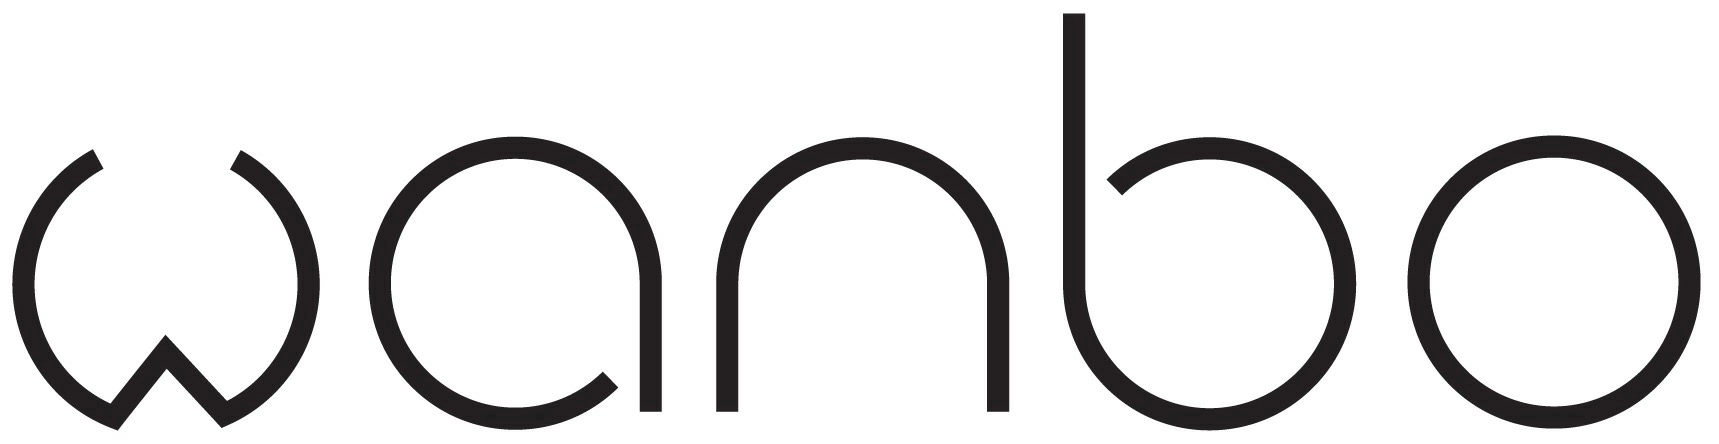 Логотип Wanbo